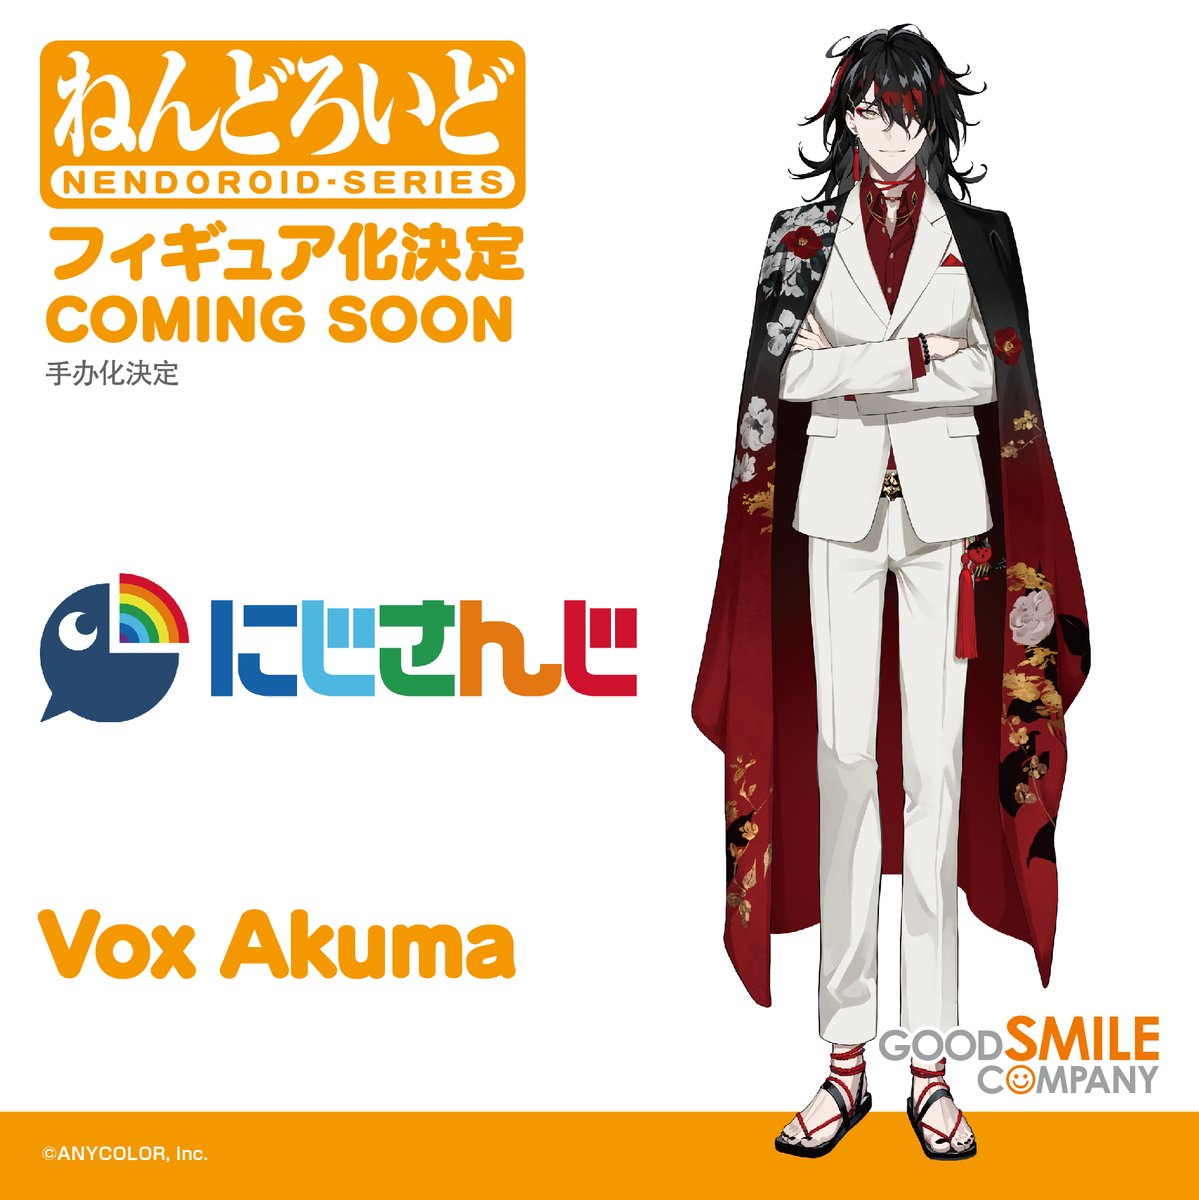 Anime Expo 2022 Figure Update!

Good Smile Company
NIJISANJI
Nendoroid Vox Akuma

Stay tuned to for more info!

#NIJISANJI #goodsmile #AX2022 #GSCatAX2022